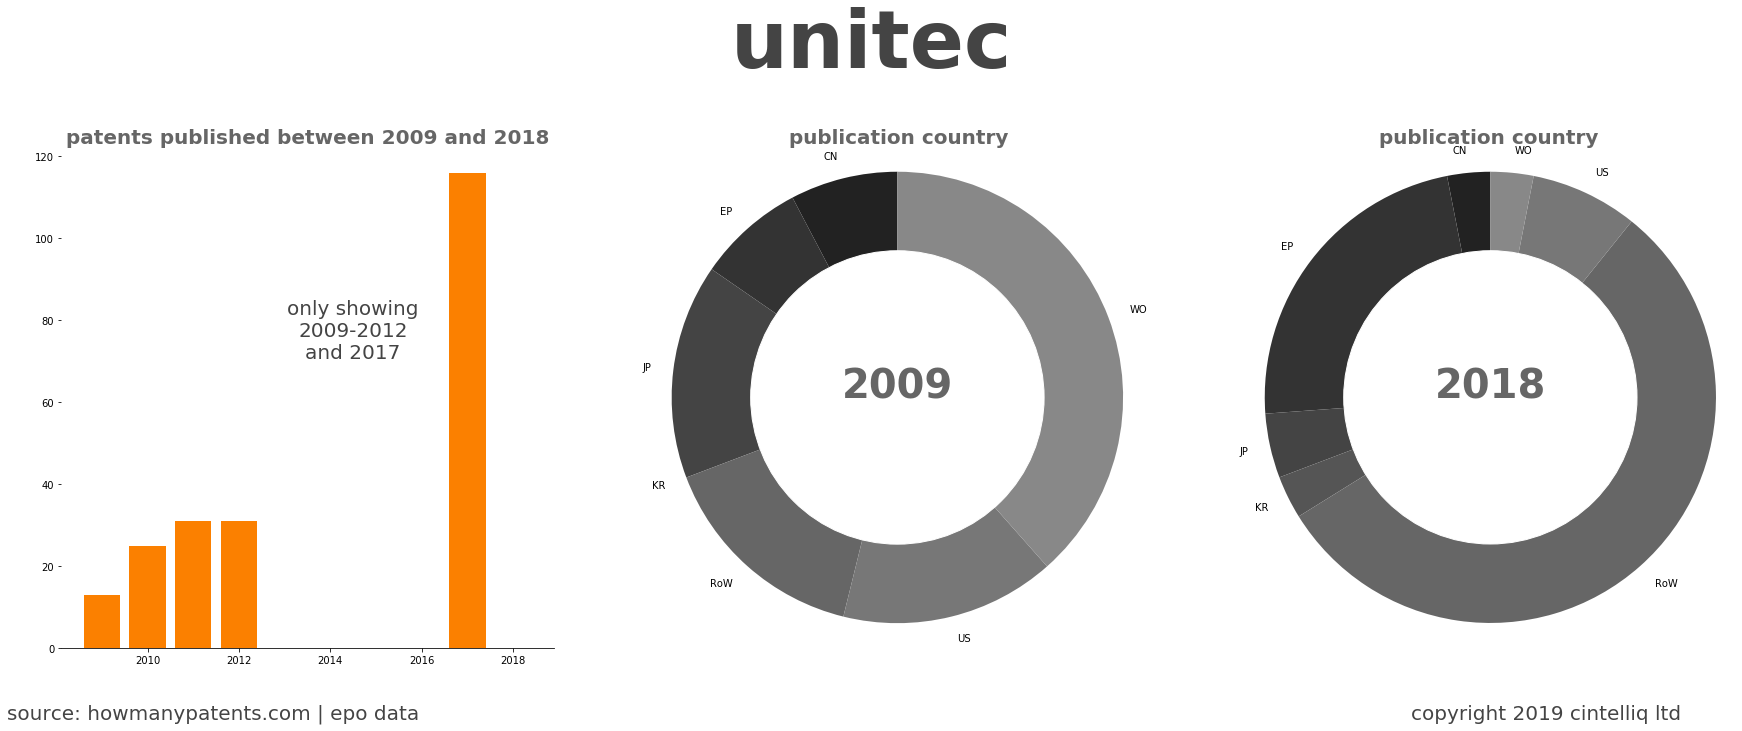 summary of patents for Unitec